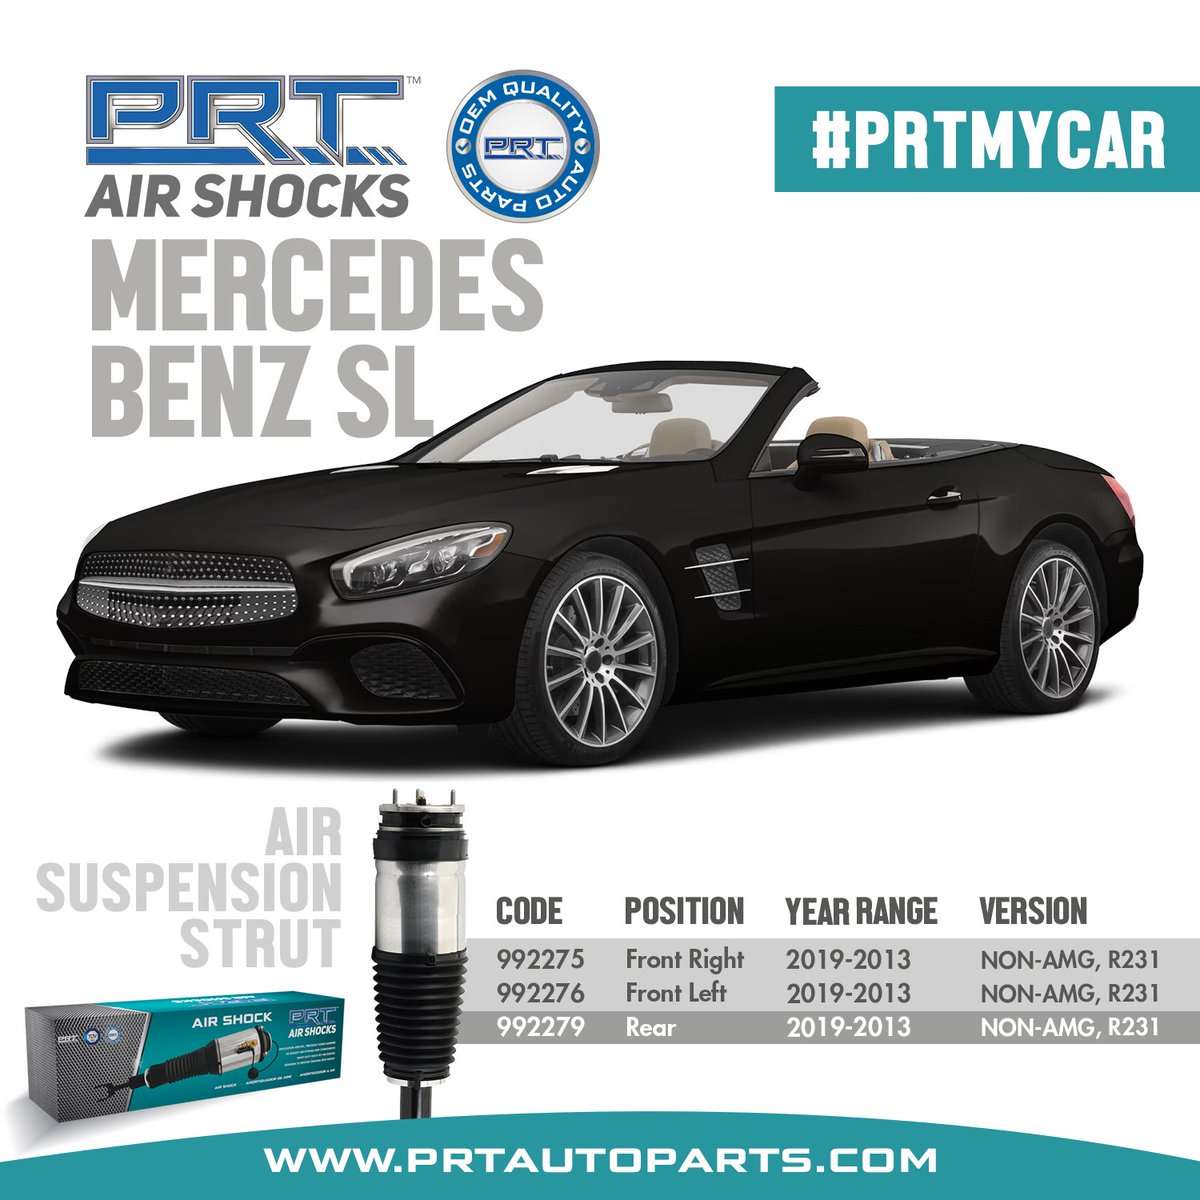 PRT Air Shocks and Air Springs for Mercedes-Benz SL!!!

prtautoparts.com/parts-catalog/
⠀  
#prtmycar #Mercedesbenz #Mercedes #benz #sl #prt #prtautoparts #autoparts #airshocks #aisprings #shocks #strut #completestrut #strutassembly #shockabsorber #suspension #steering #ridecontrol